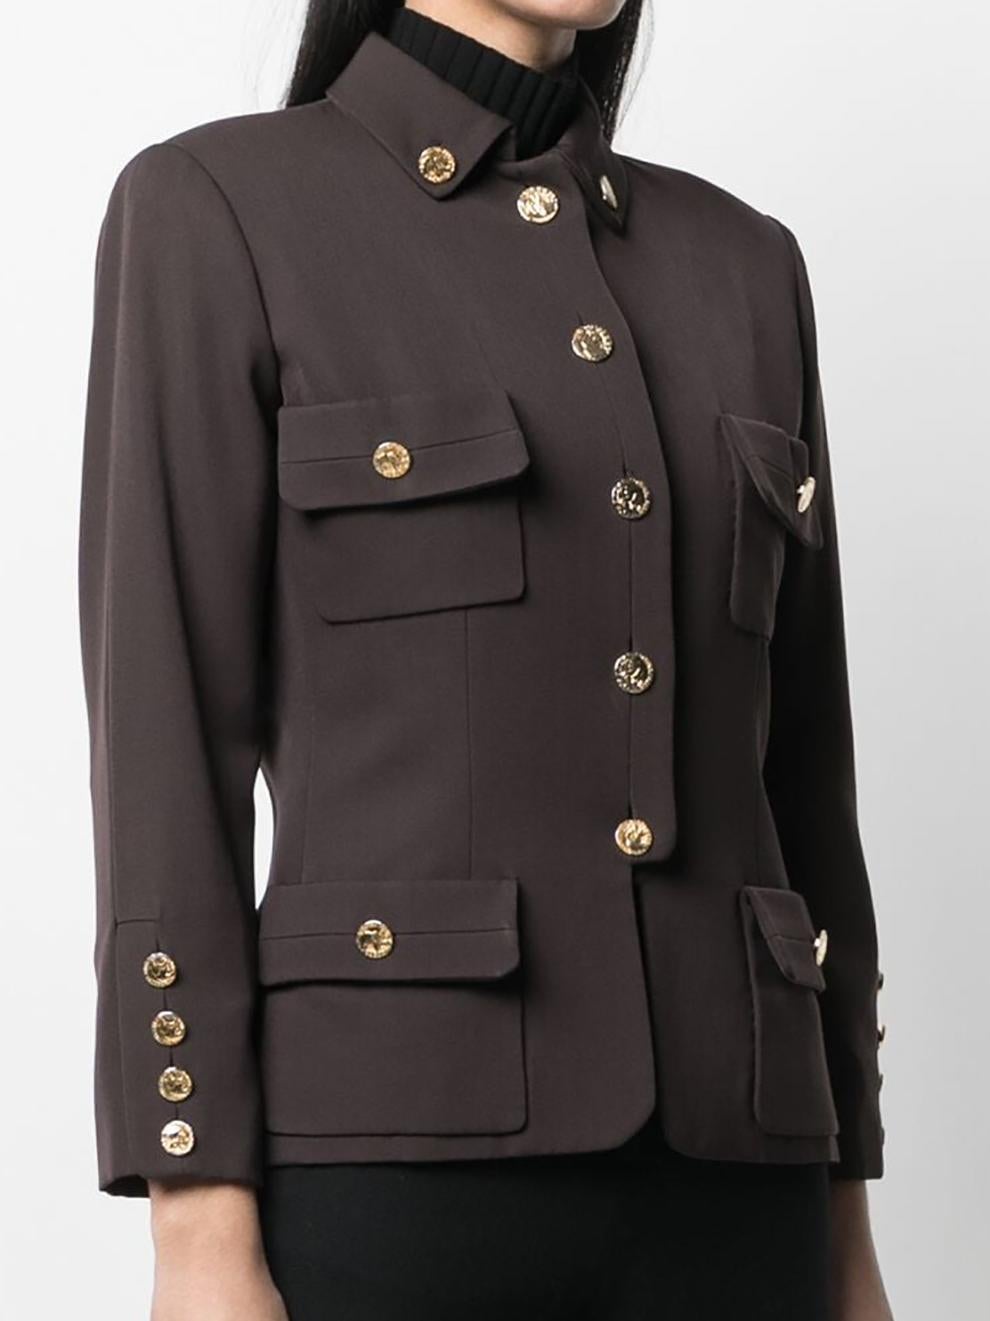 chanel military jacket